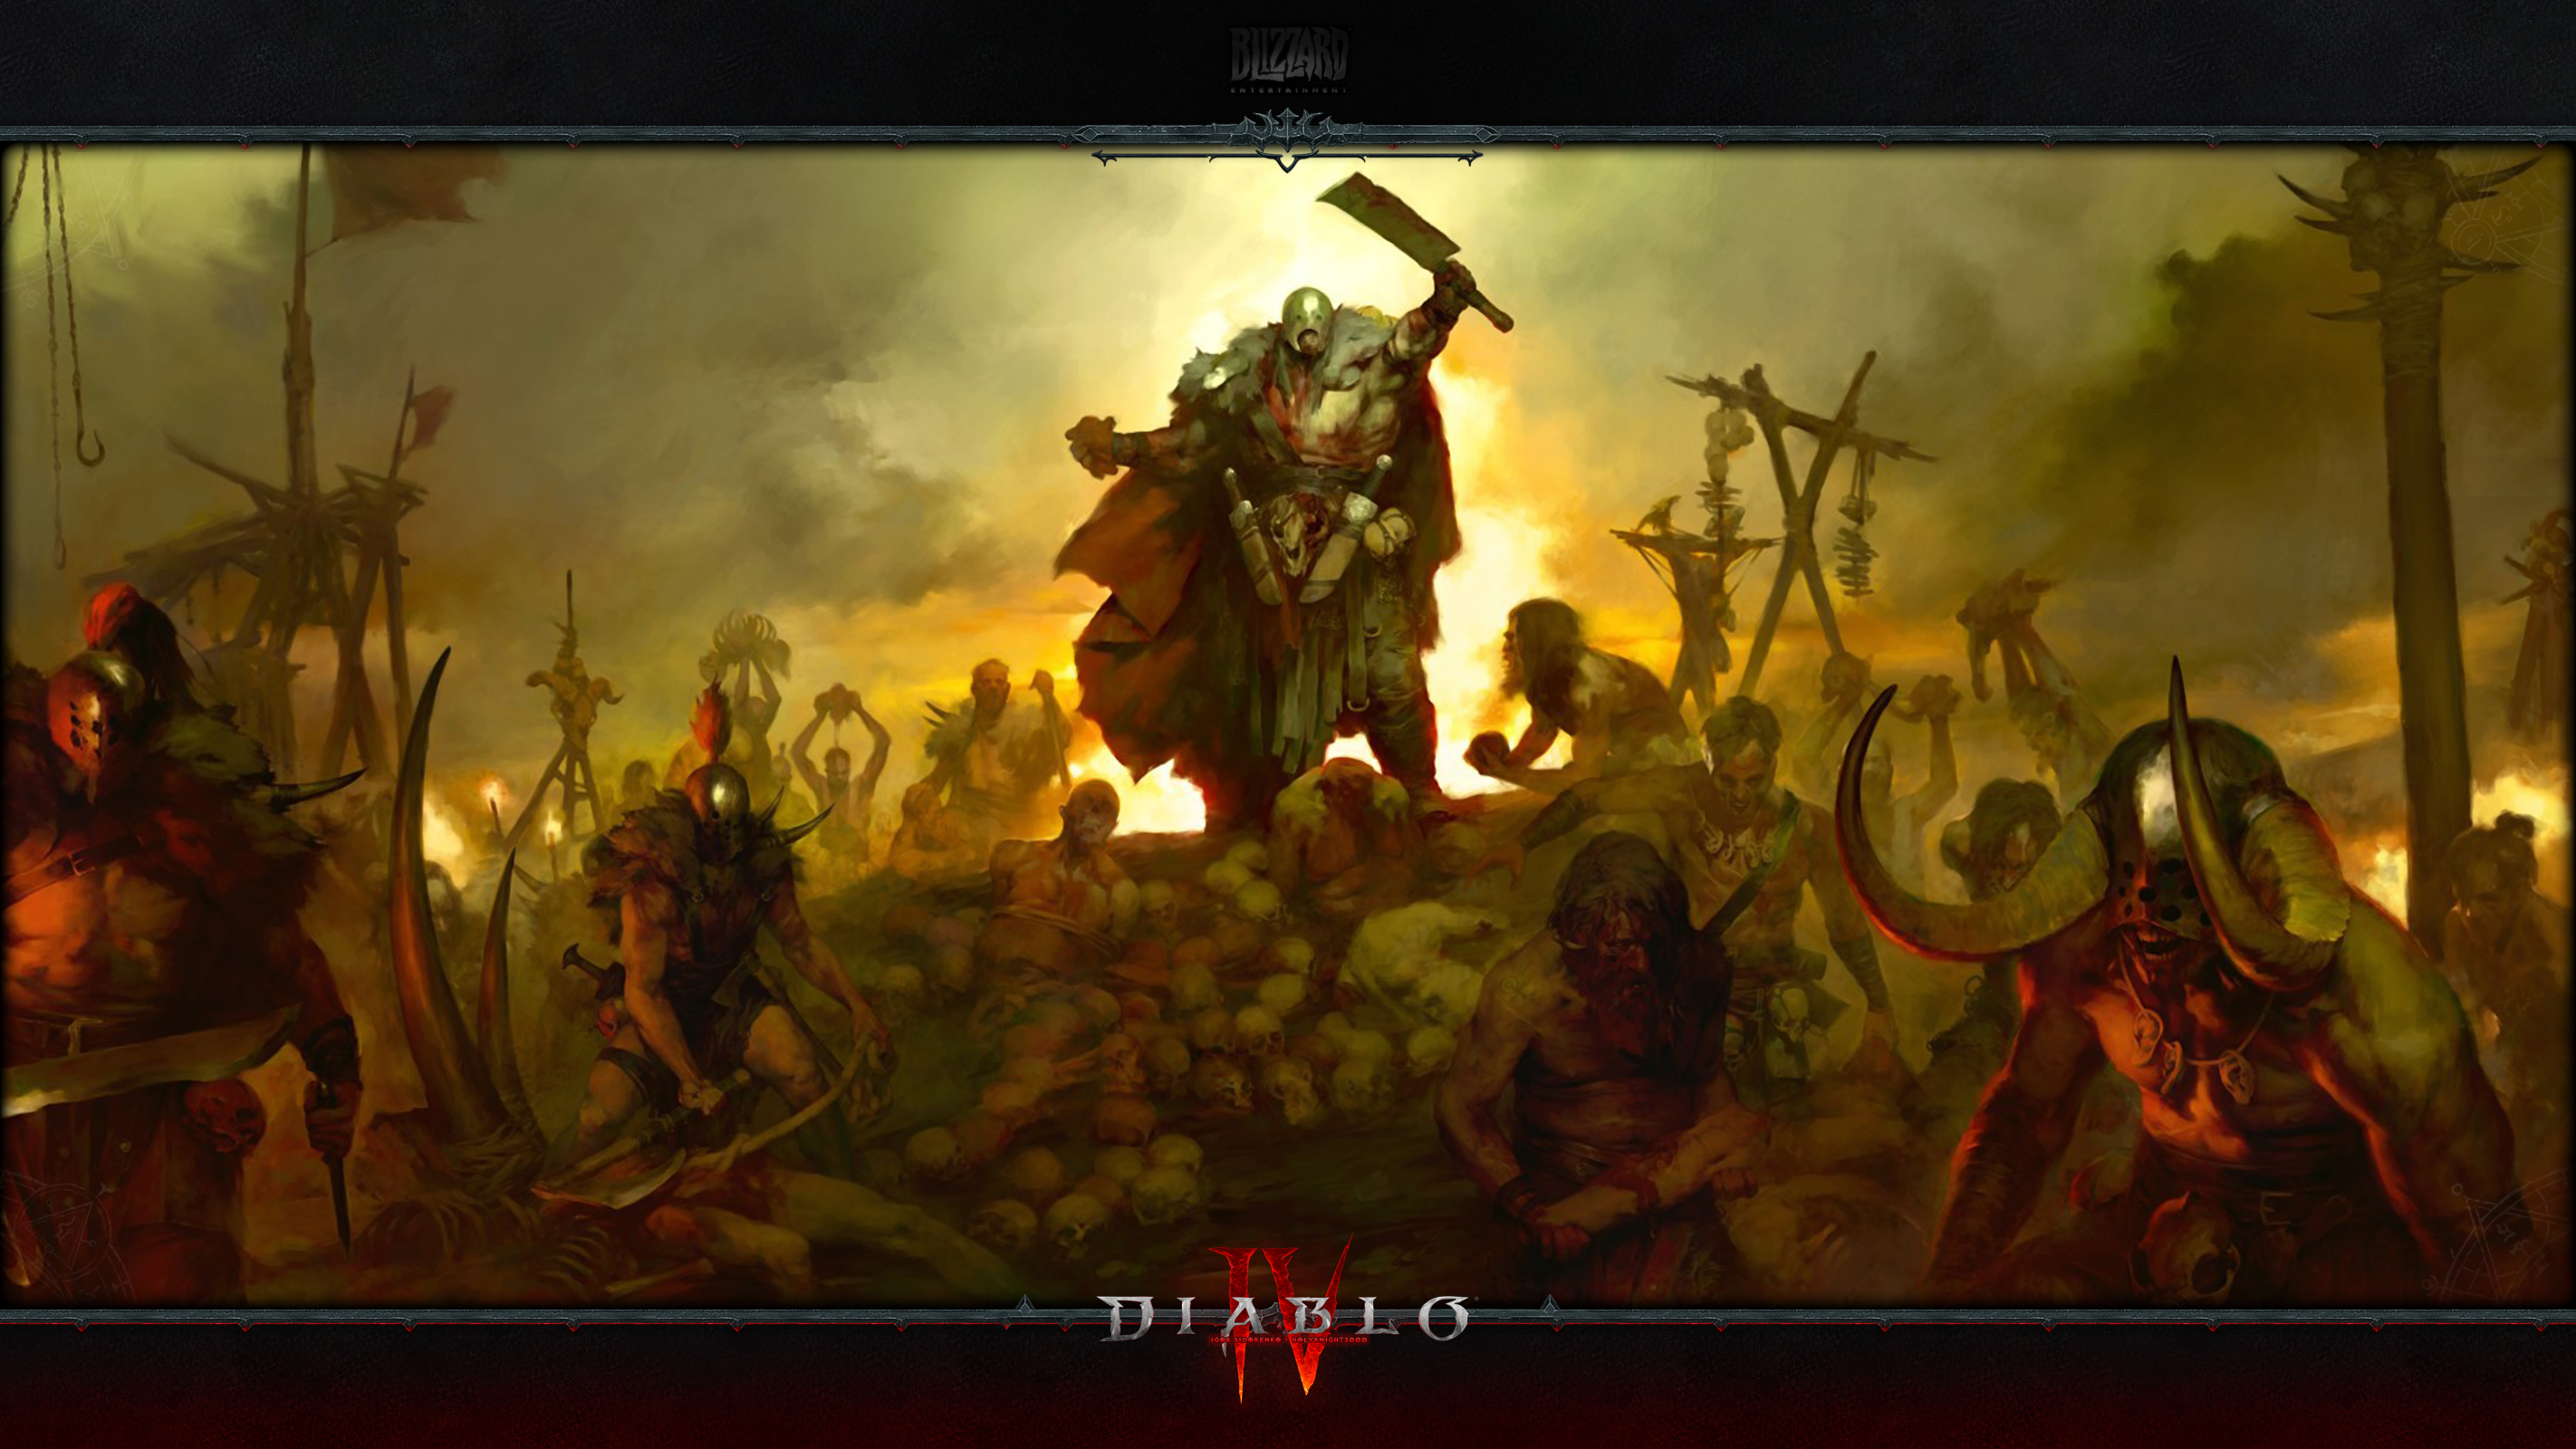 Diablo IV #11: The Cannibal Family